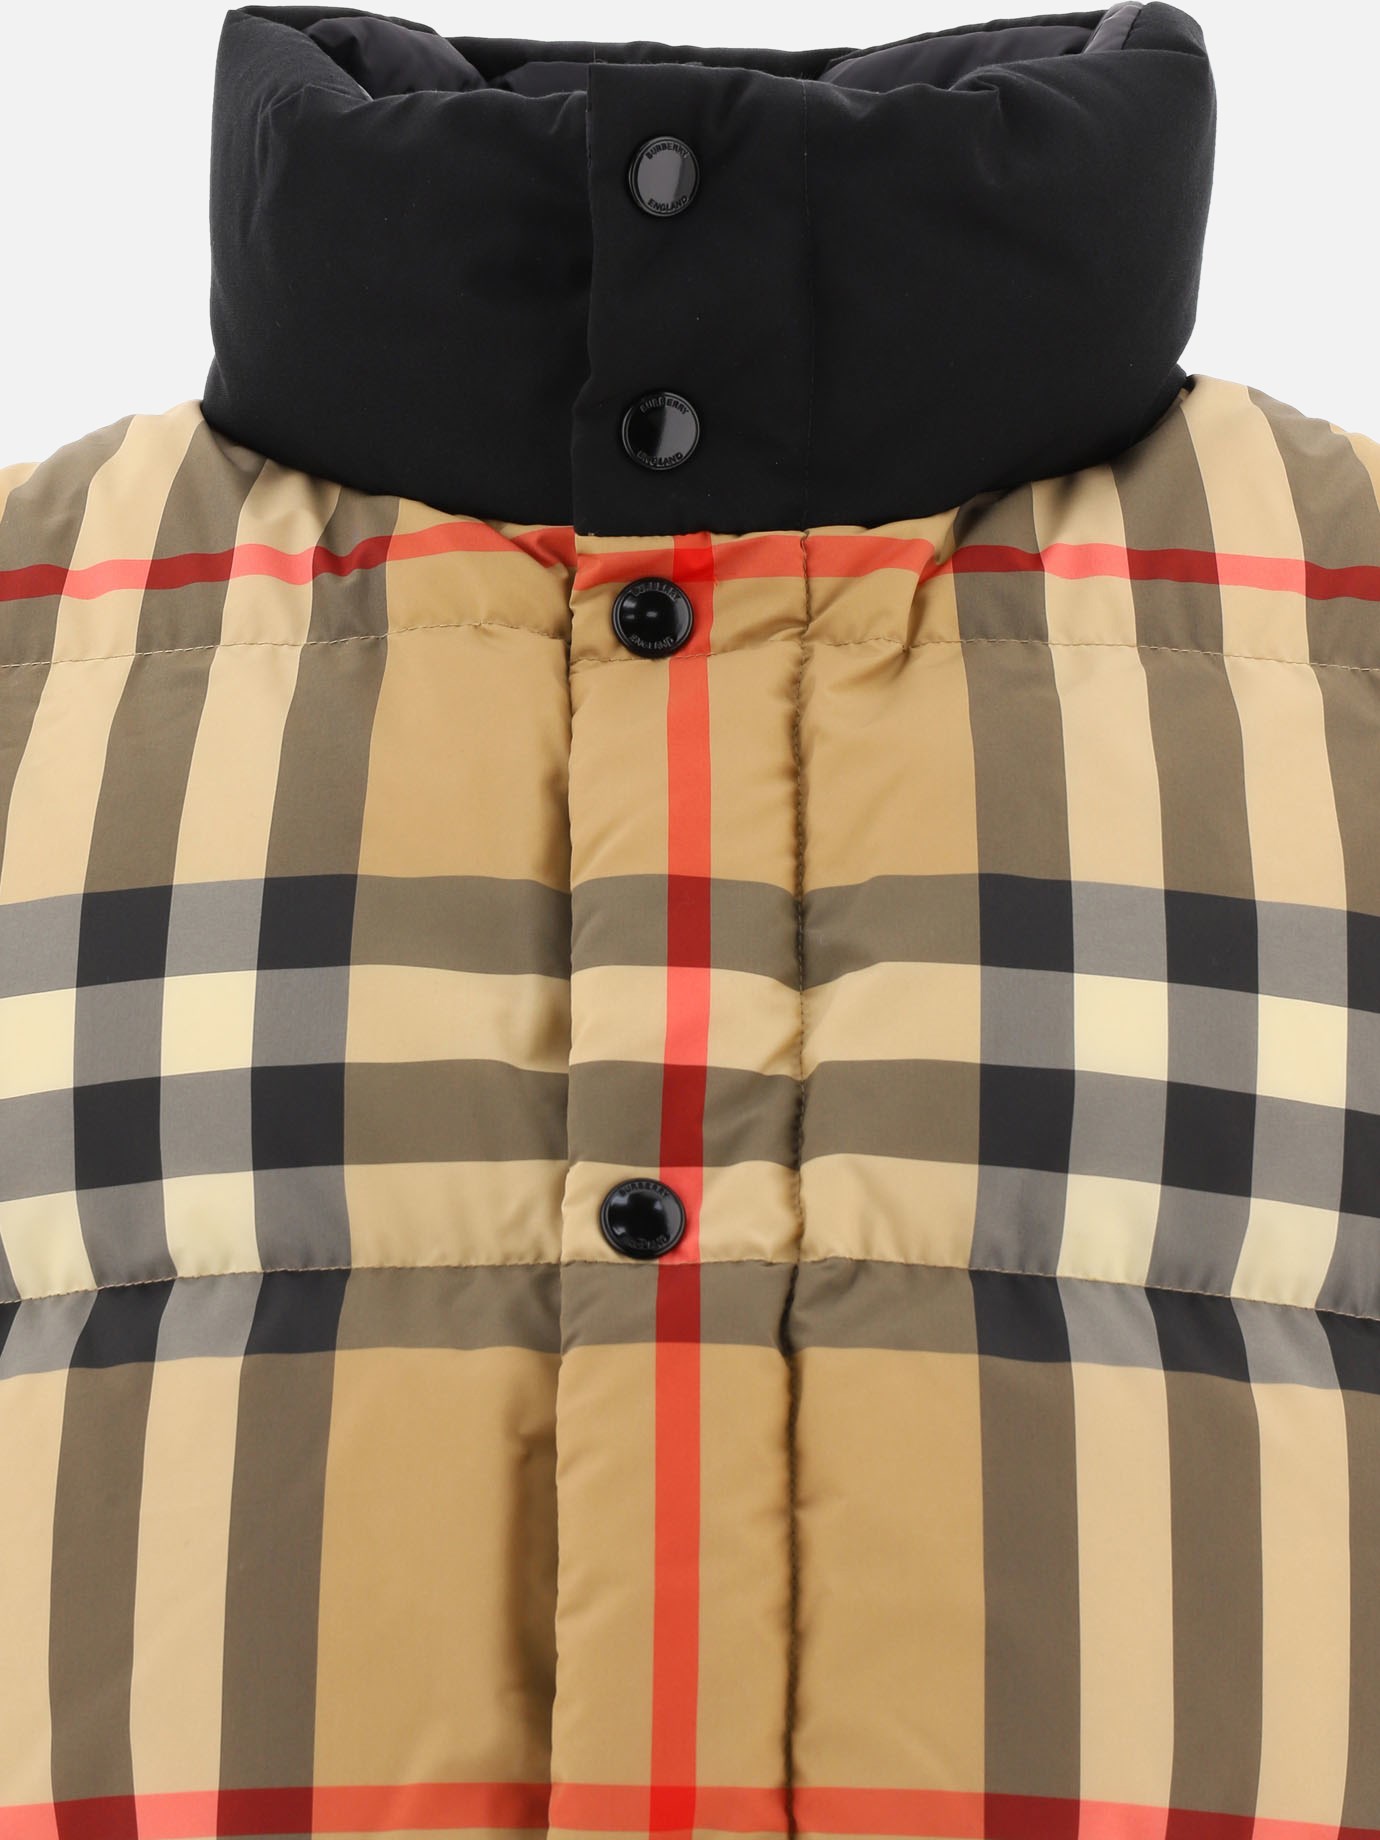  Vintage Check  vest jacket by Burberry